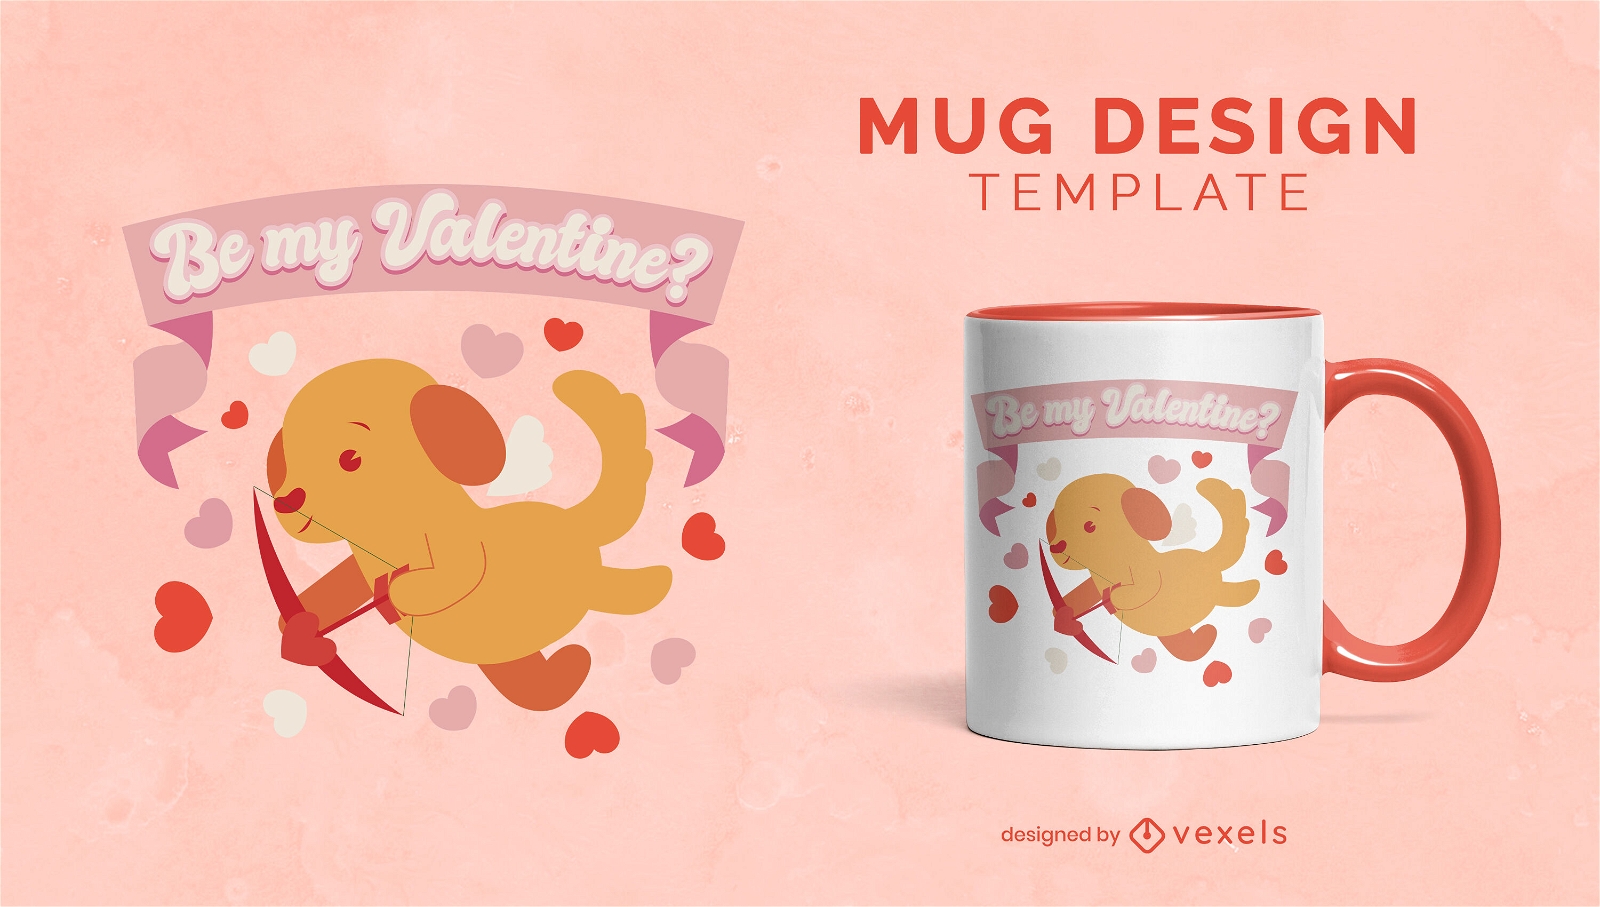 Lovely Valentine's day Cupid dog mug design